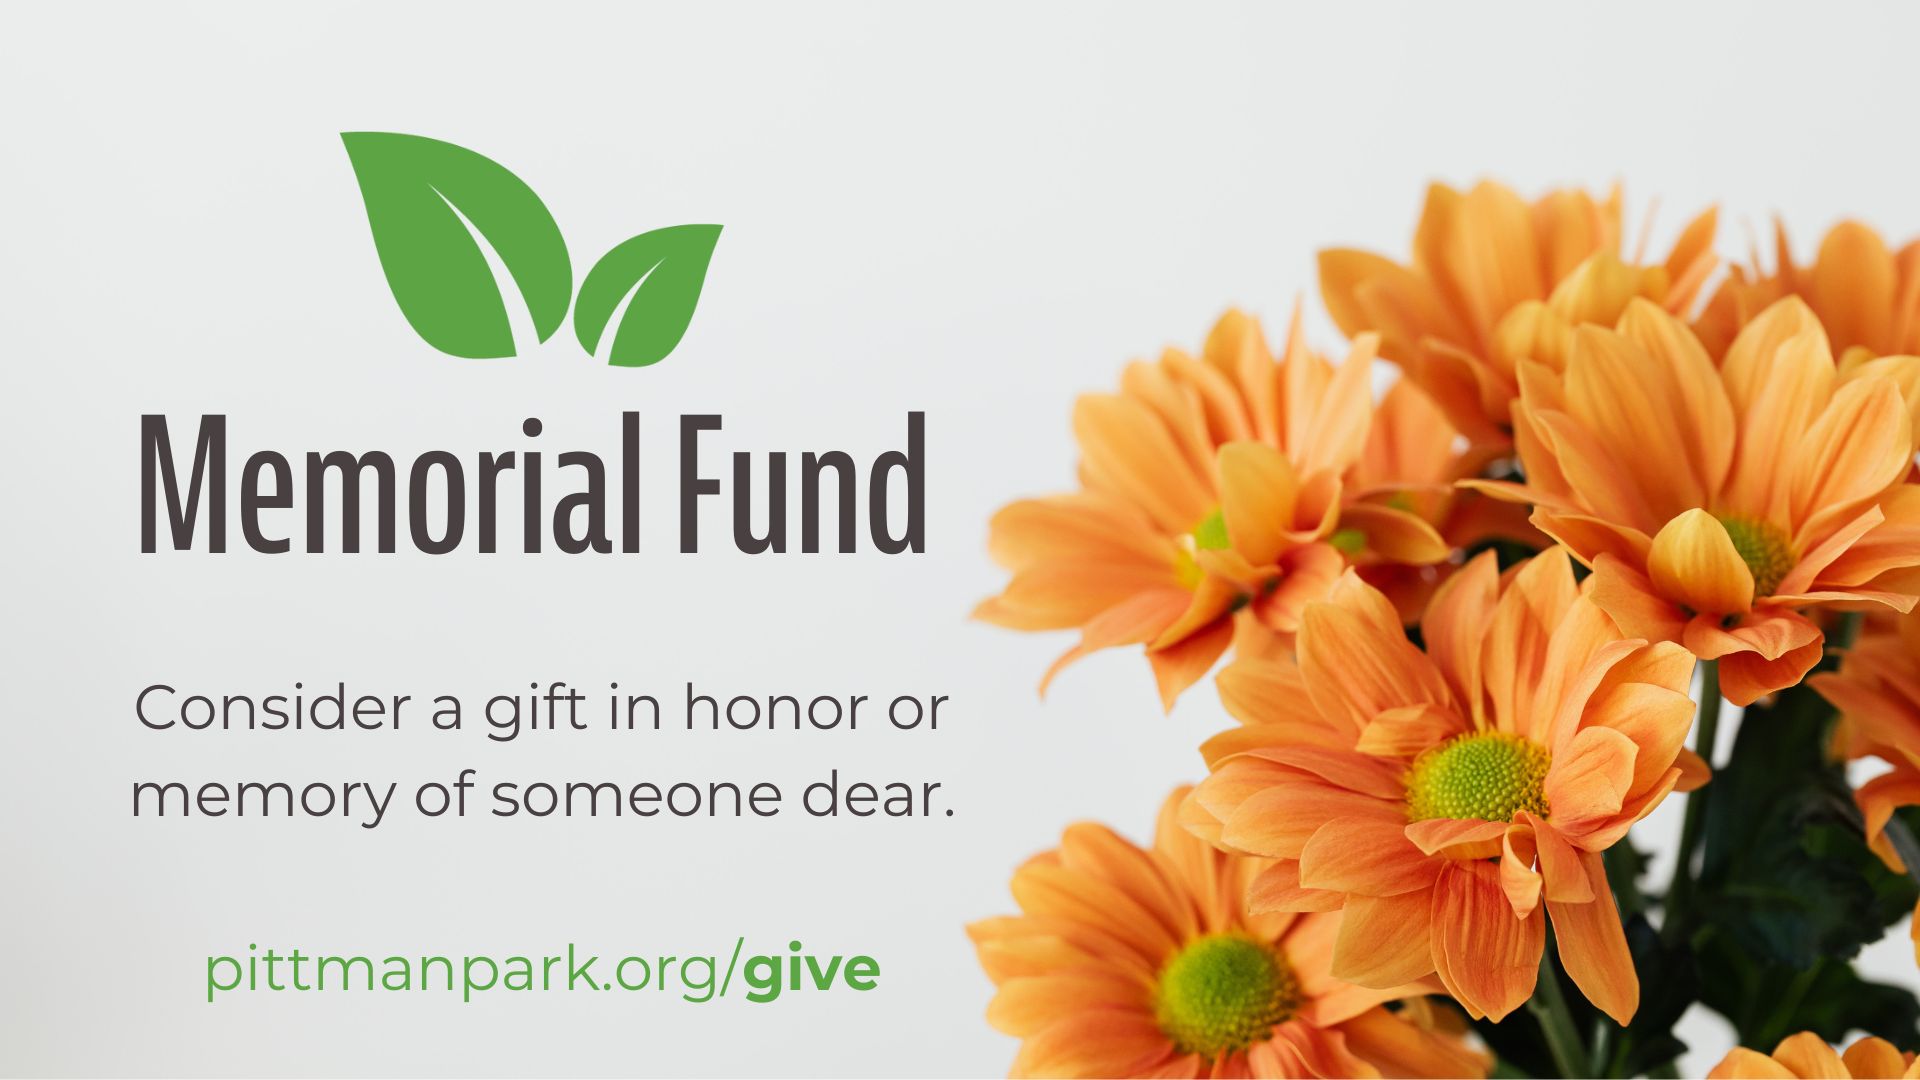 photo of orange flowers and Memorial Fund logo.